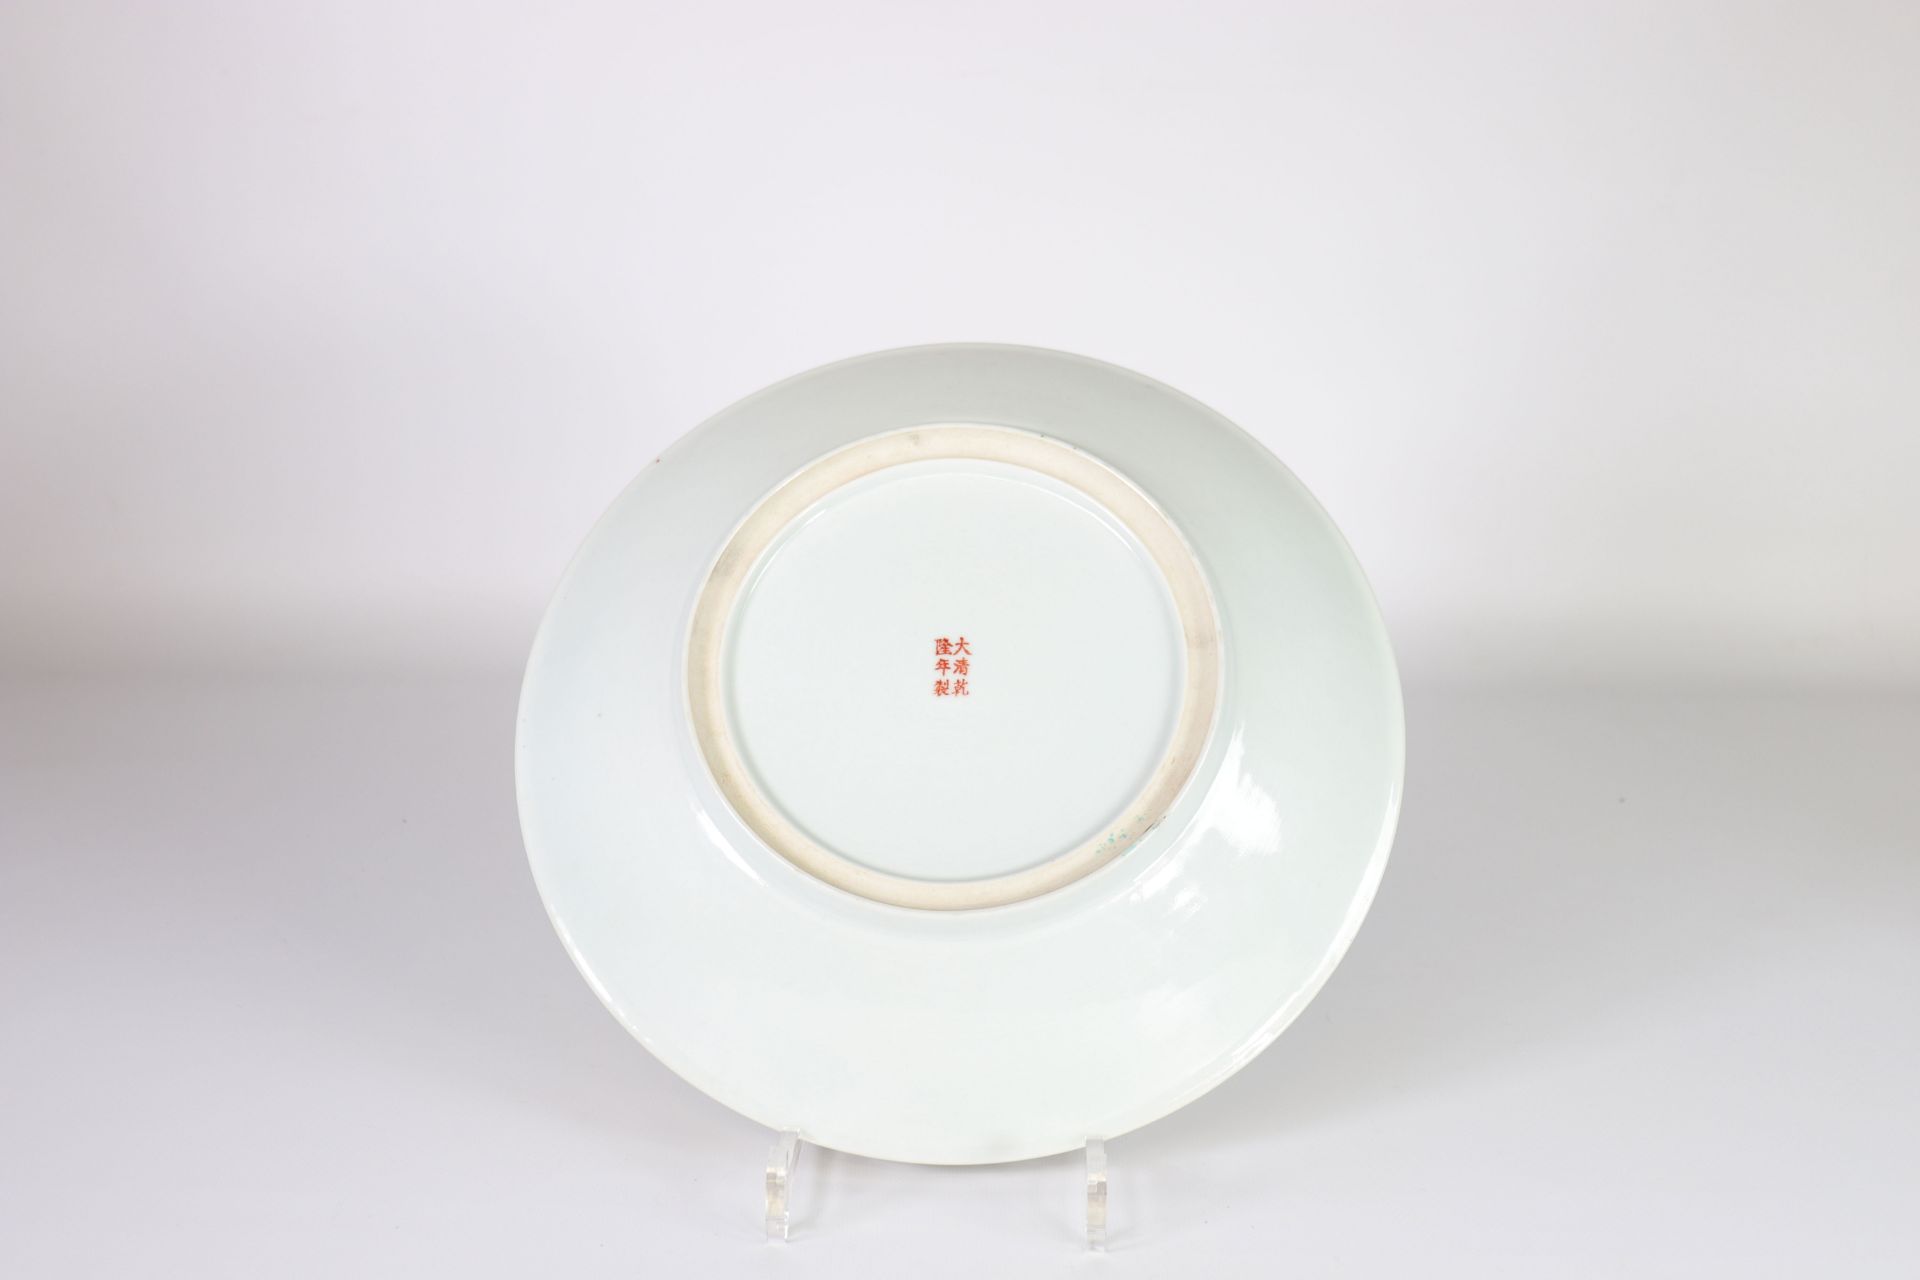 China porcelain plate dragon decor Guangxu brand - Image 2 of 2